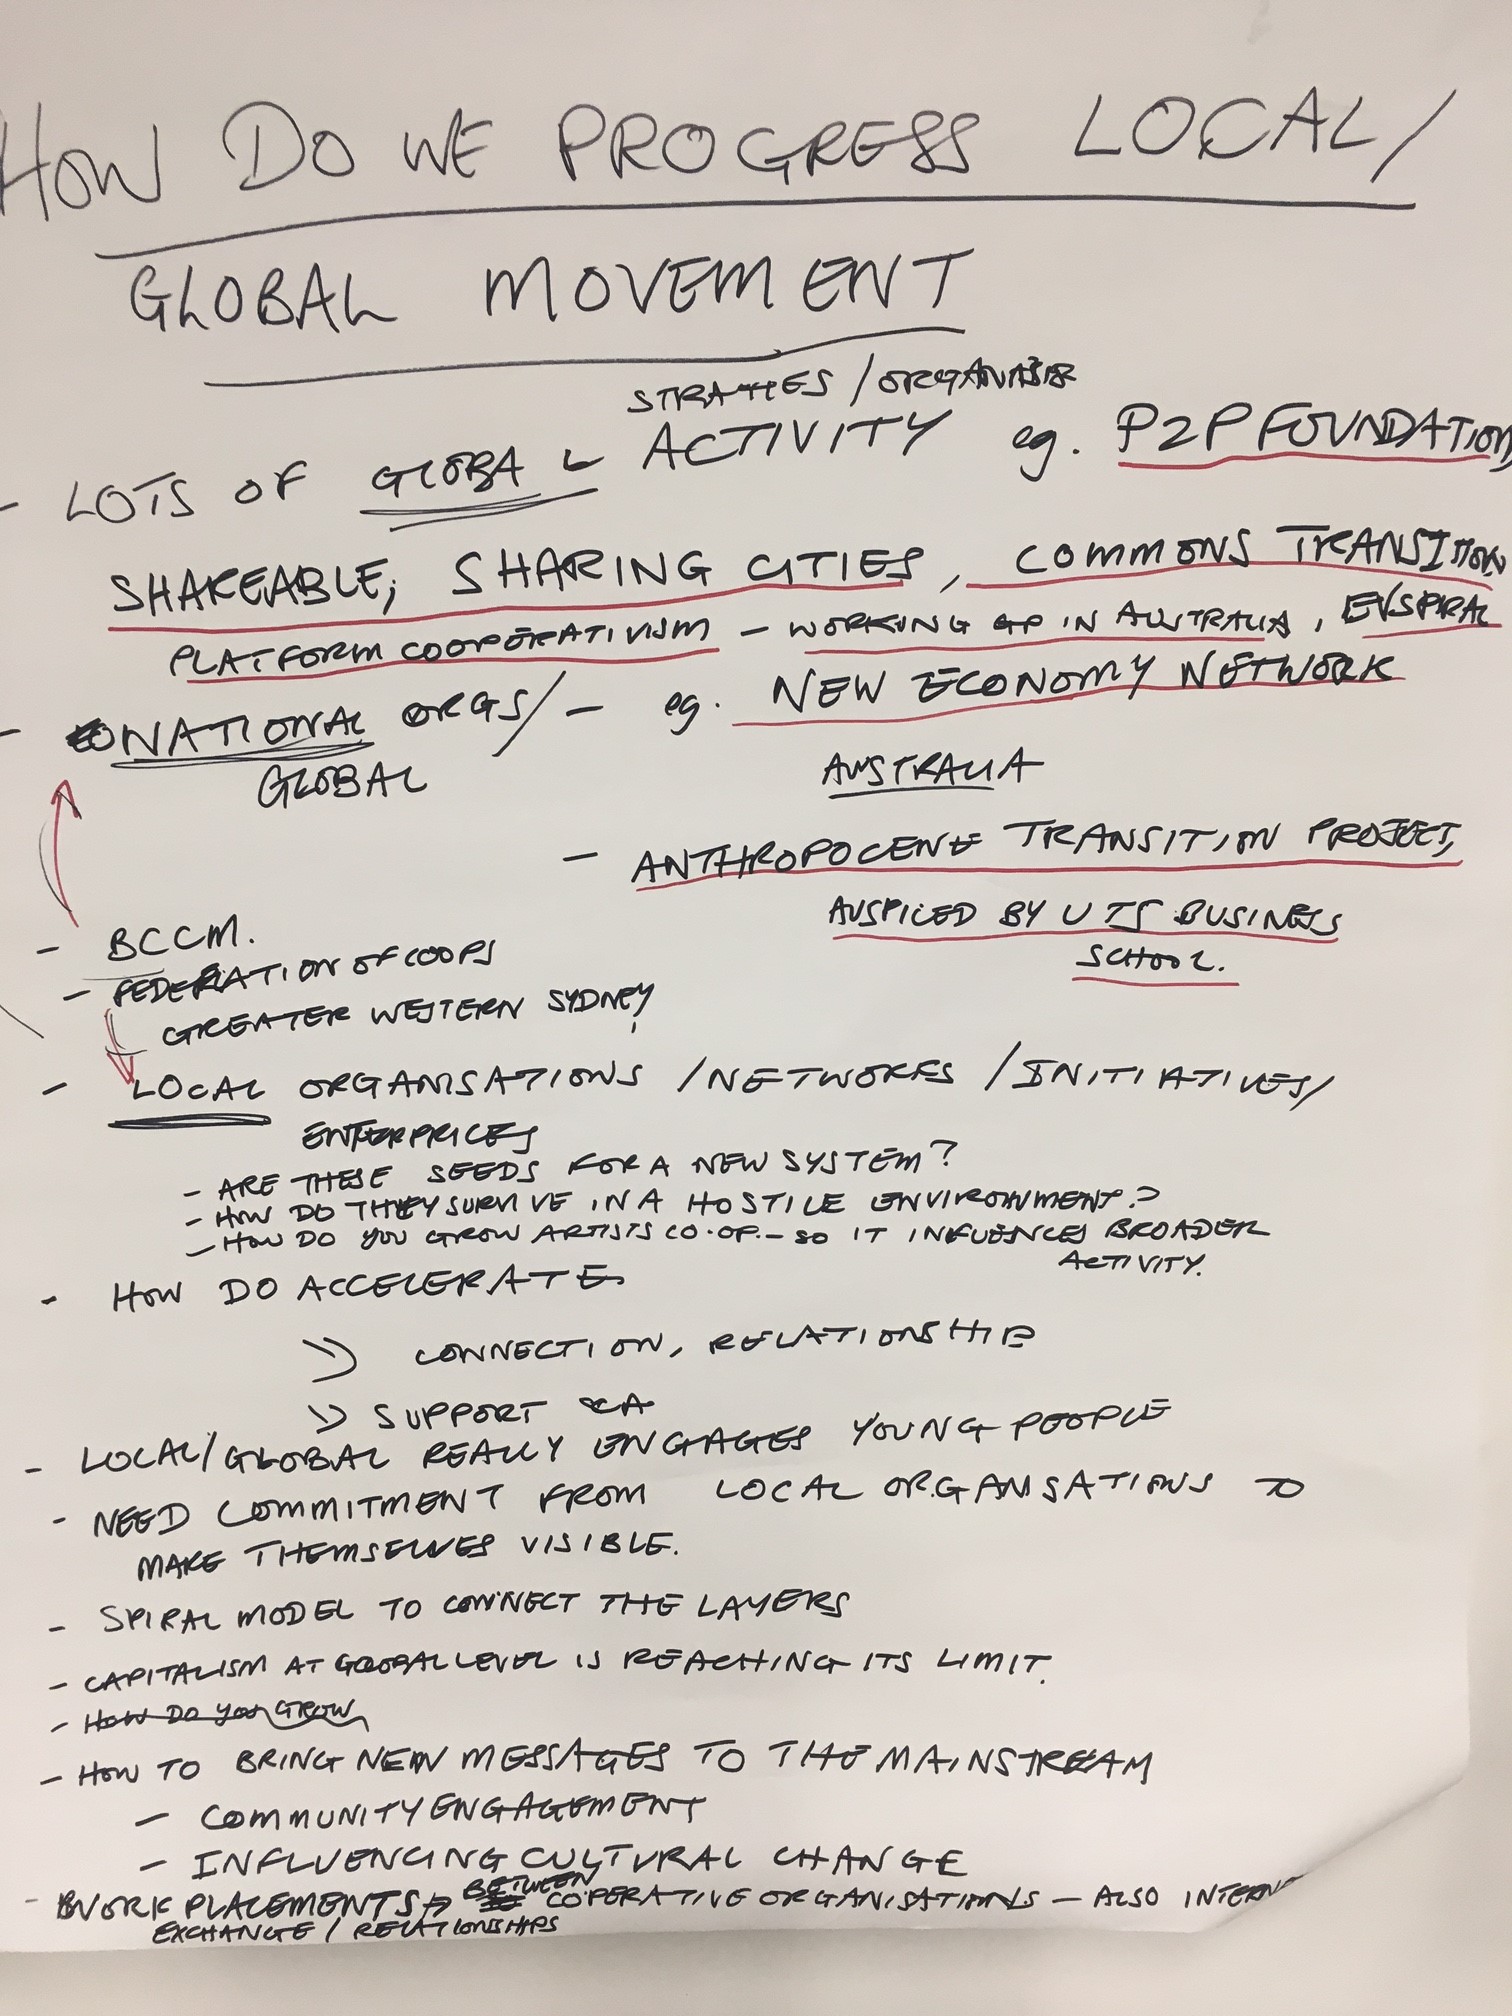 Progress Local & Global Notes